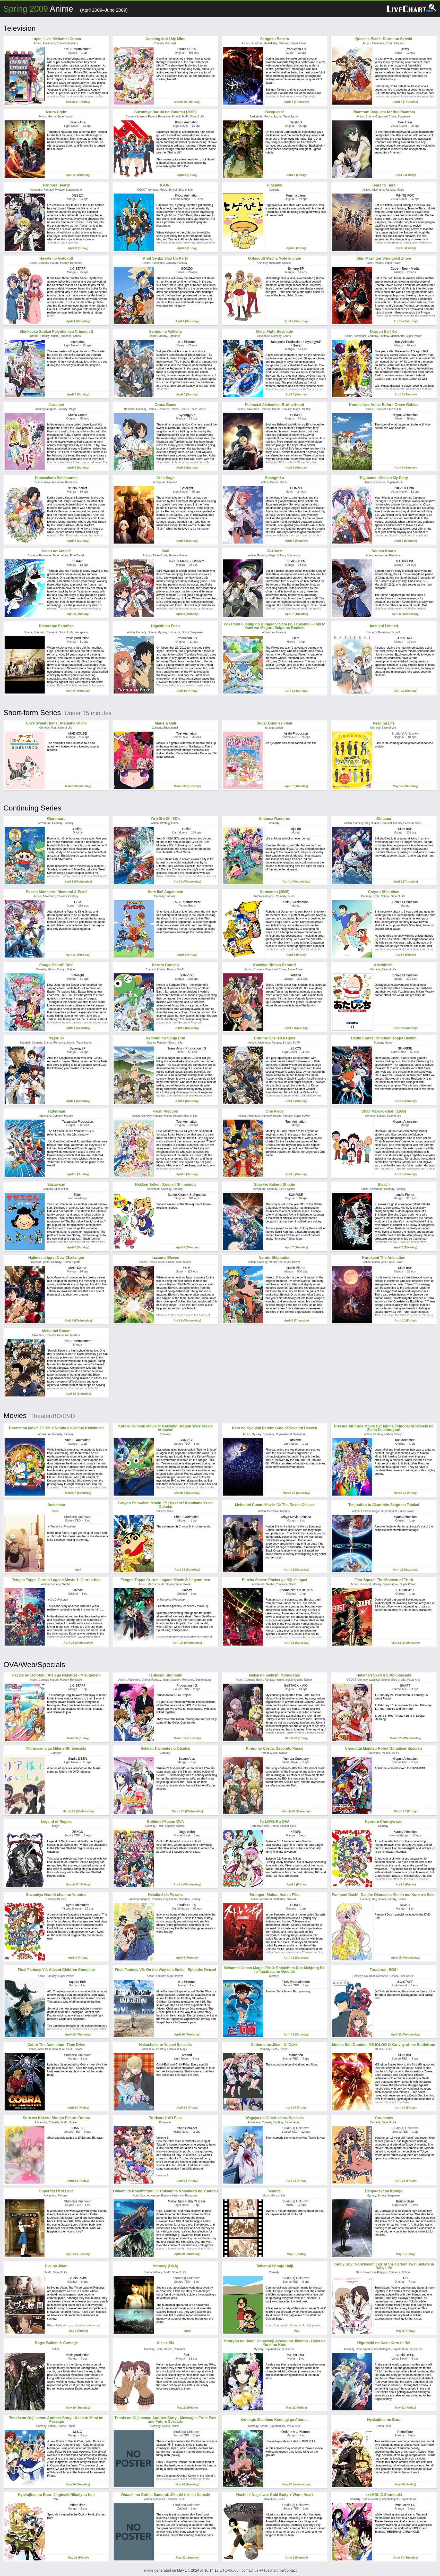 Summer 2009 Anime Chart | Anime-Planet